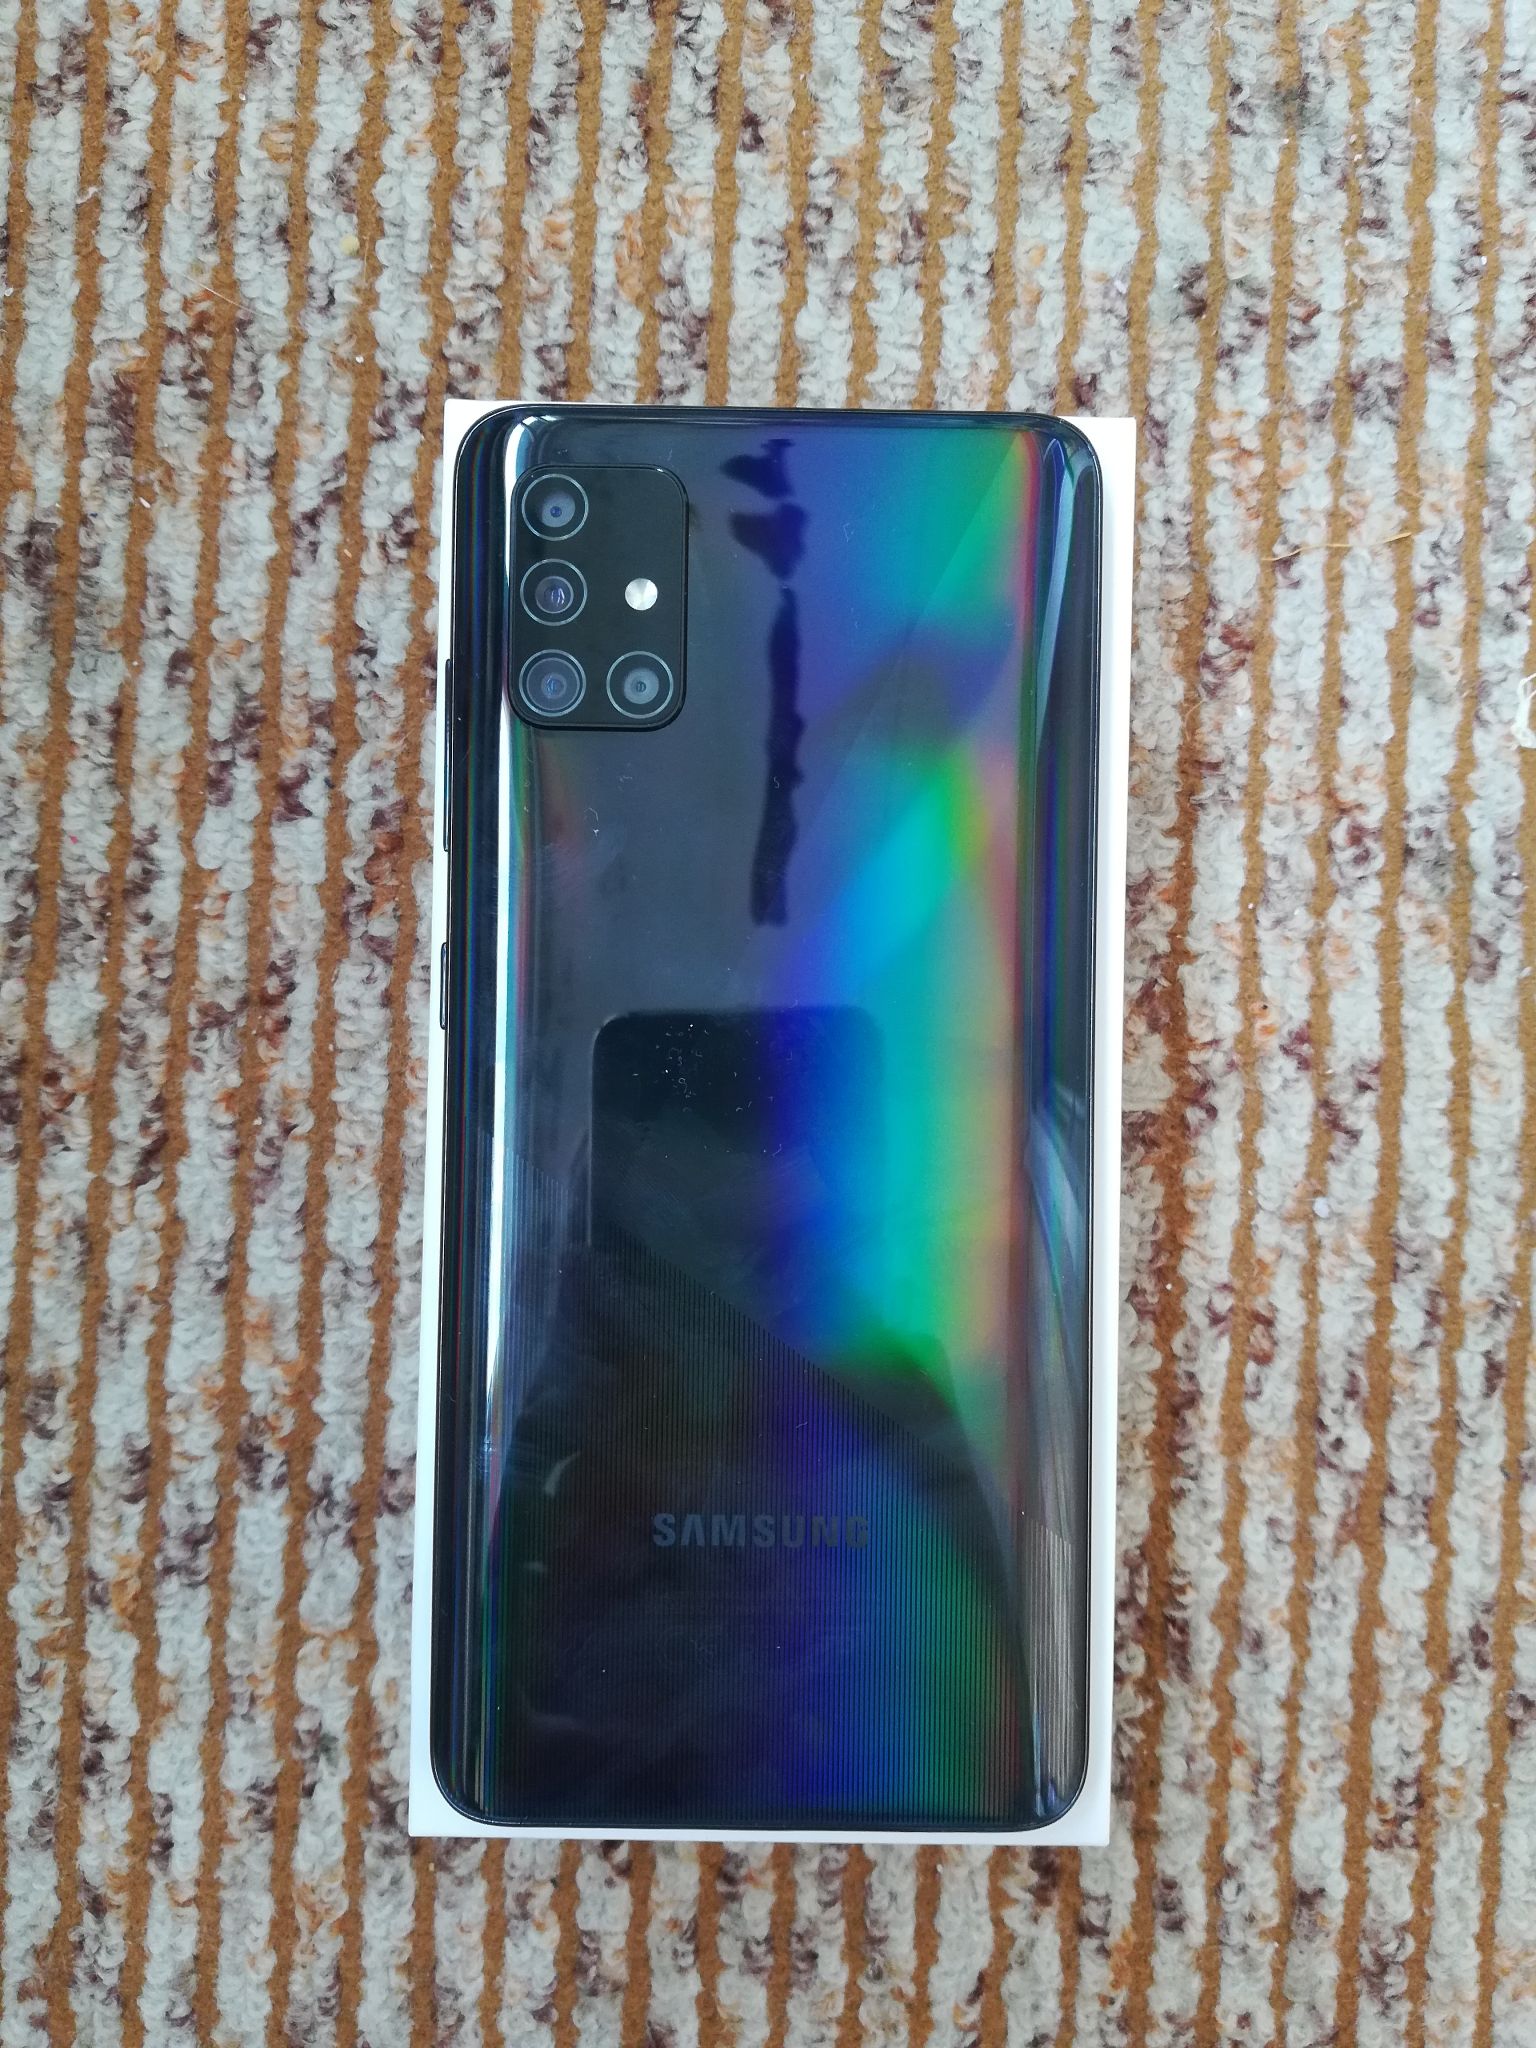 Samsung Galaxy A51 6 128gb Купить